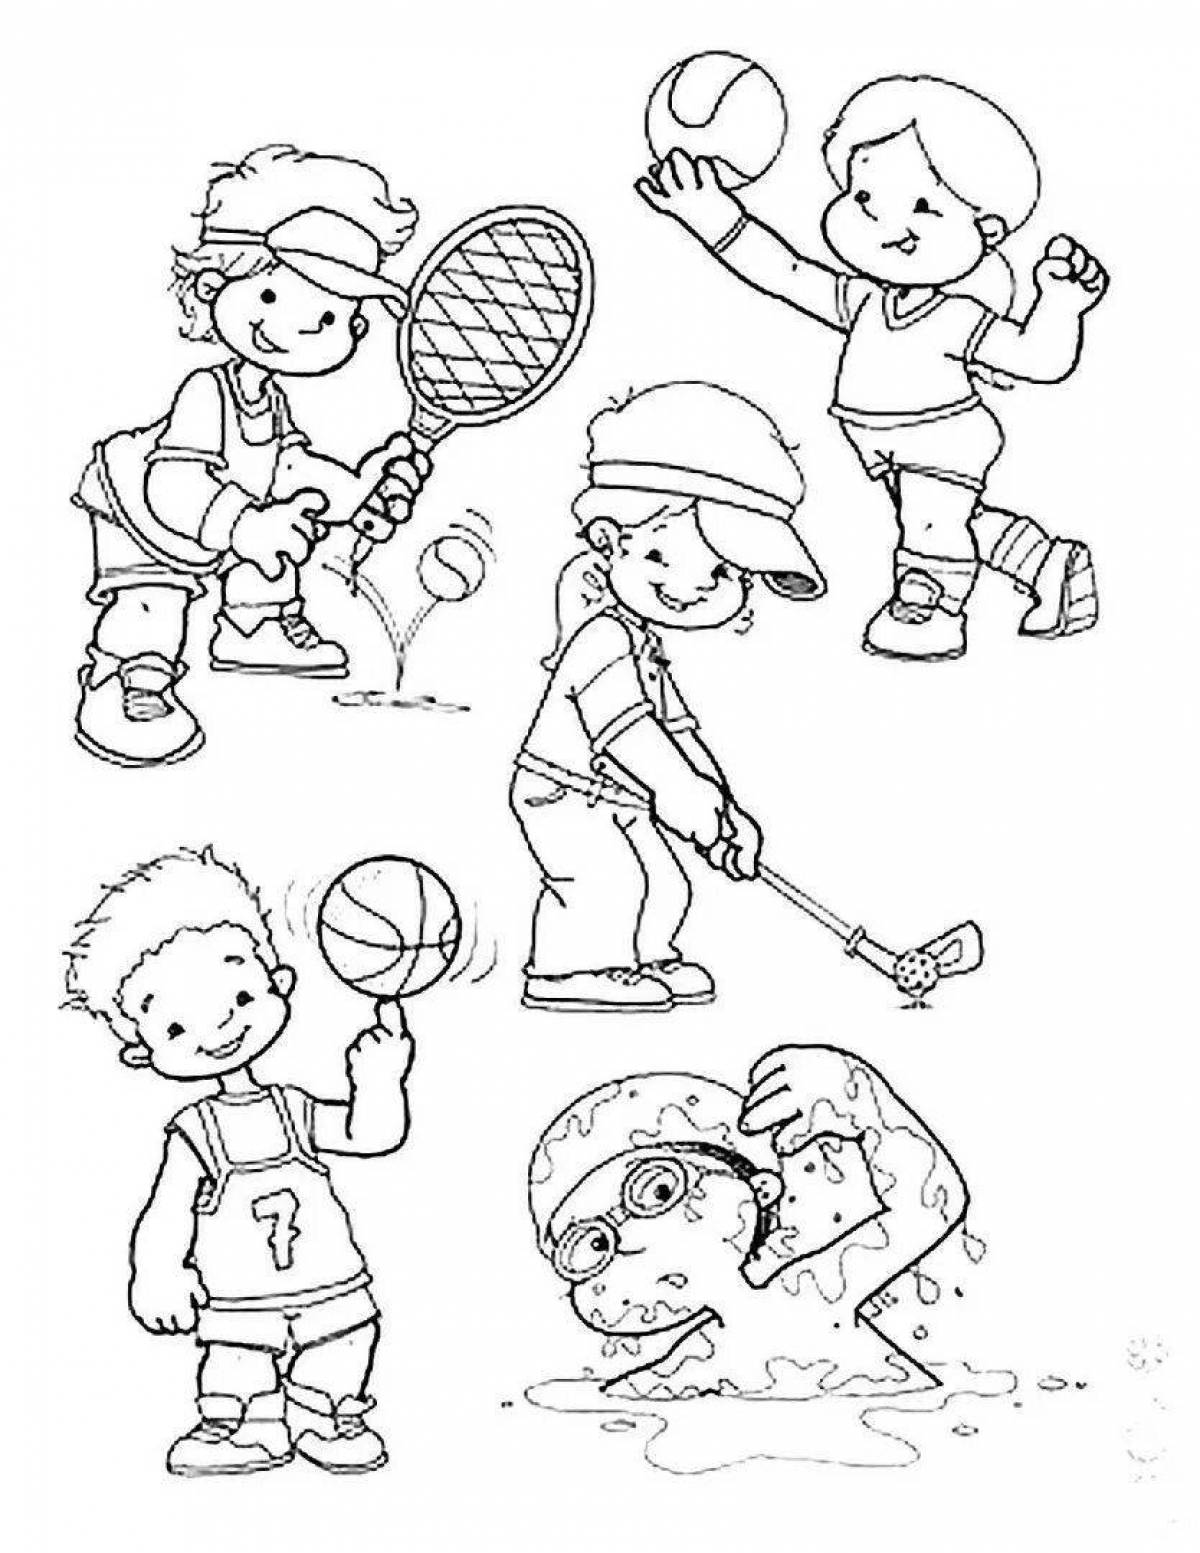 Adorable sports coloring book for kindergarten